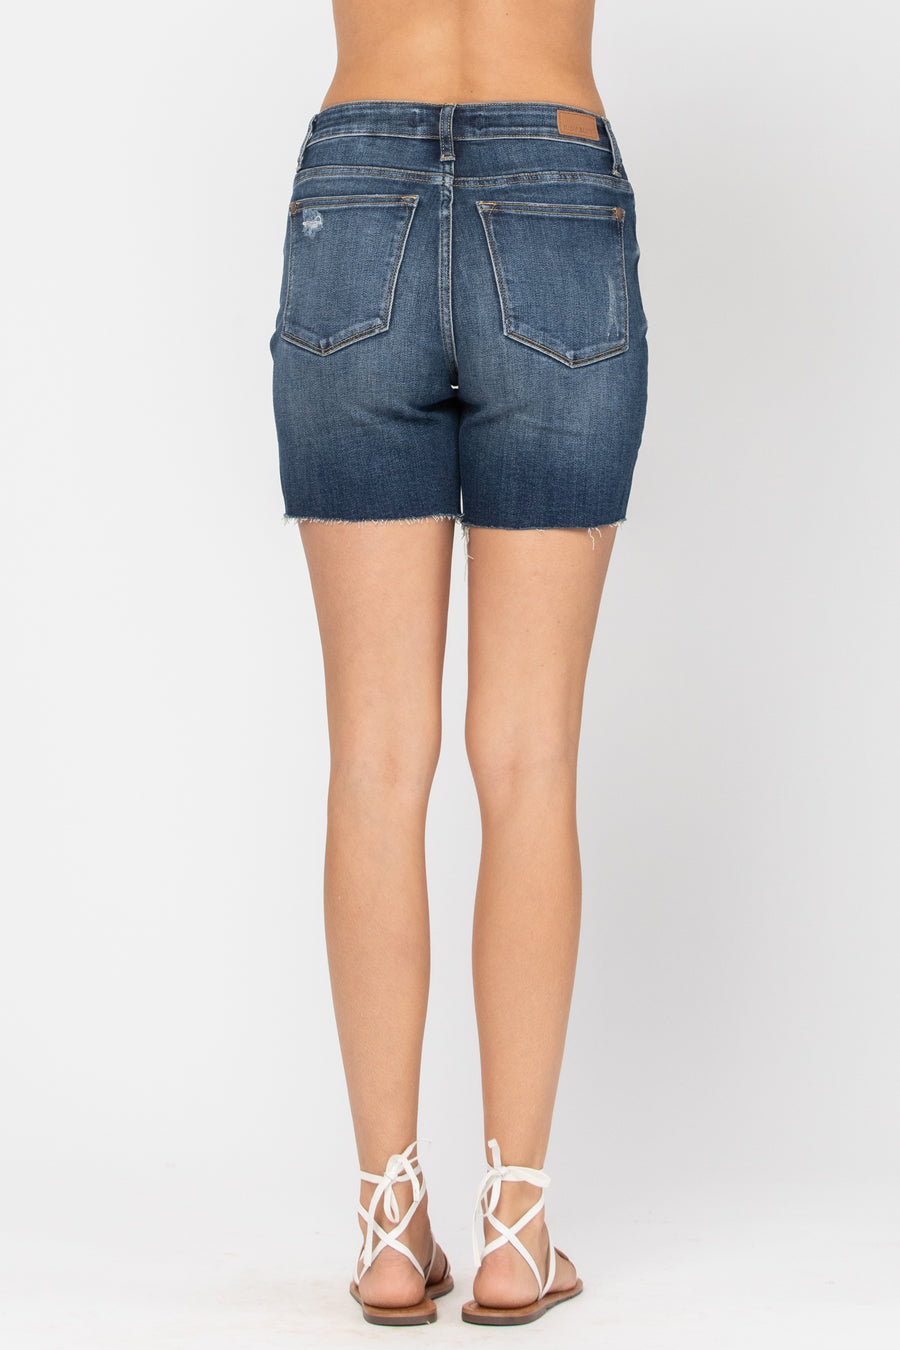 Kayla Mid-Thigh Shorts